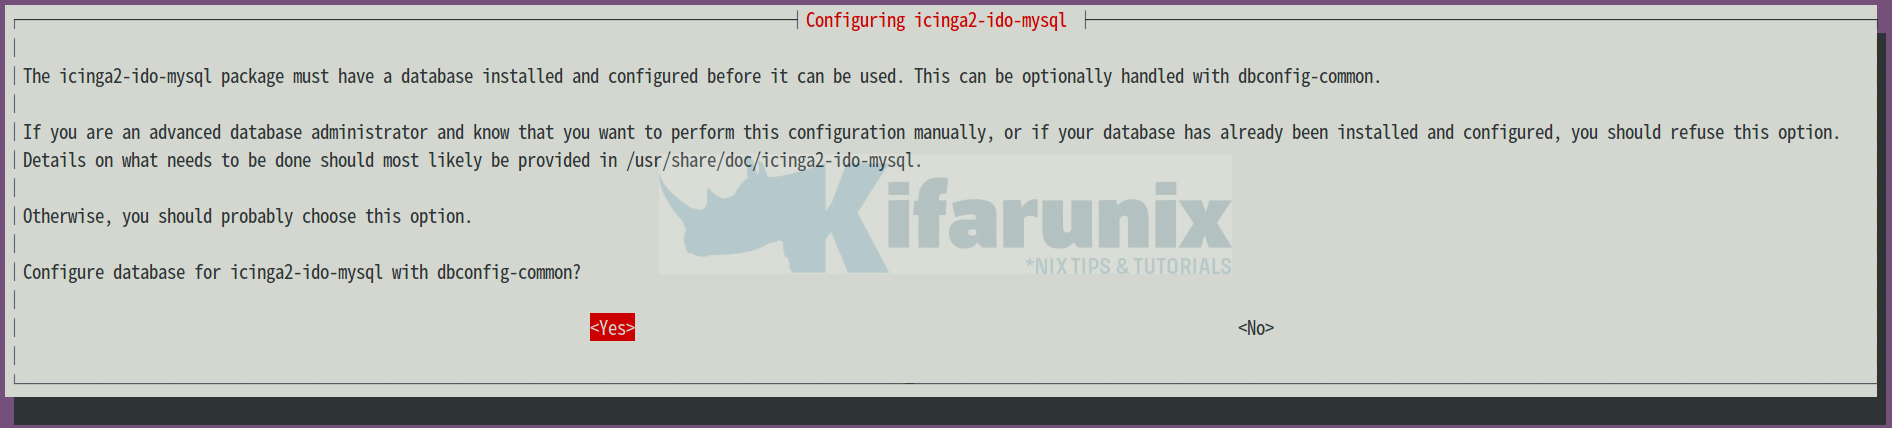 How to Install Icinga 2 and Icinga Web 2 on Ubuntu 18.04 LTS